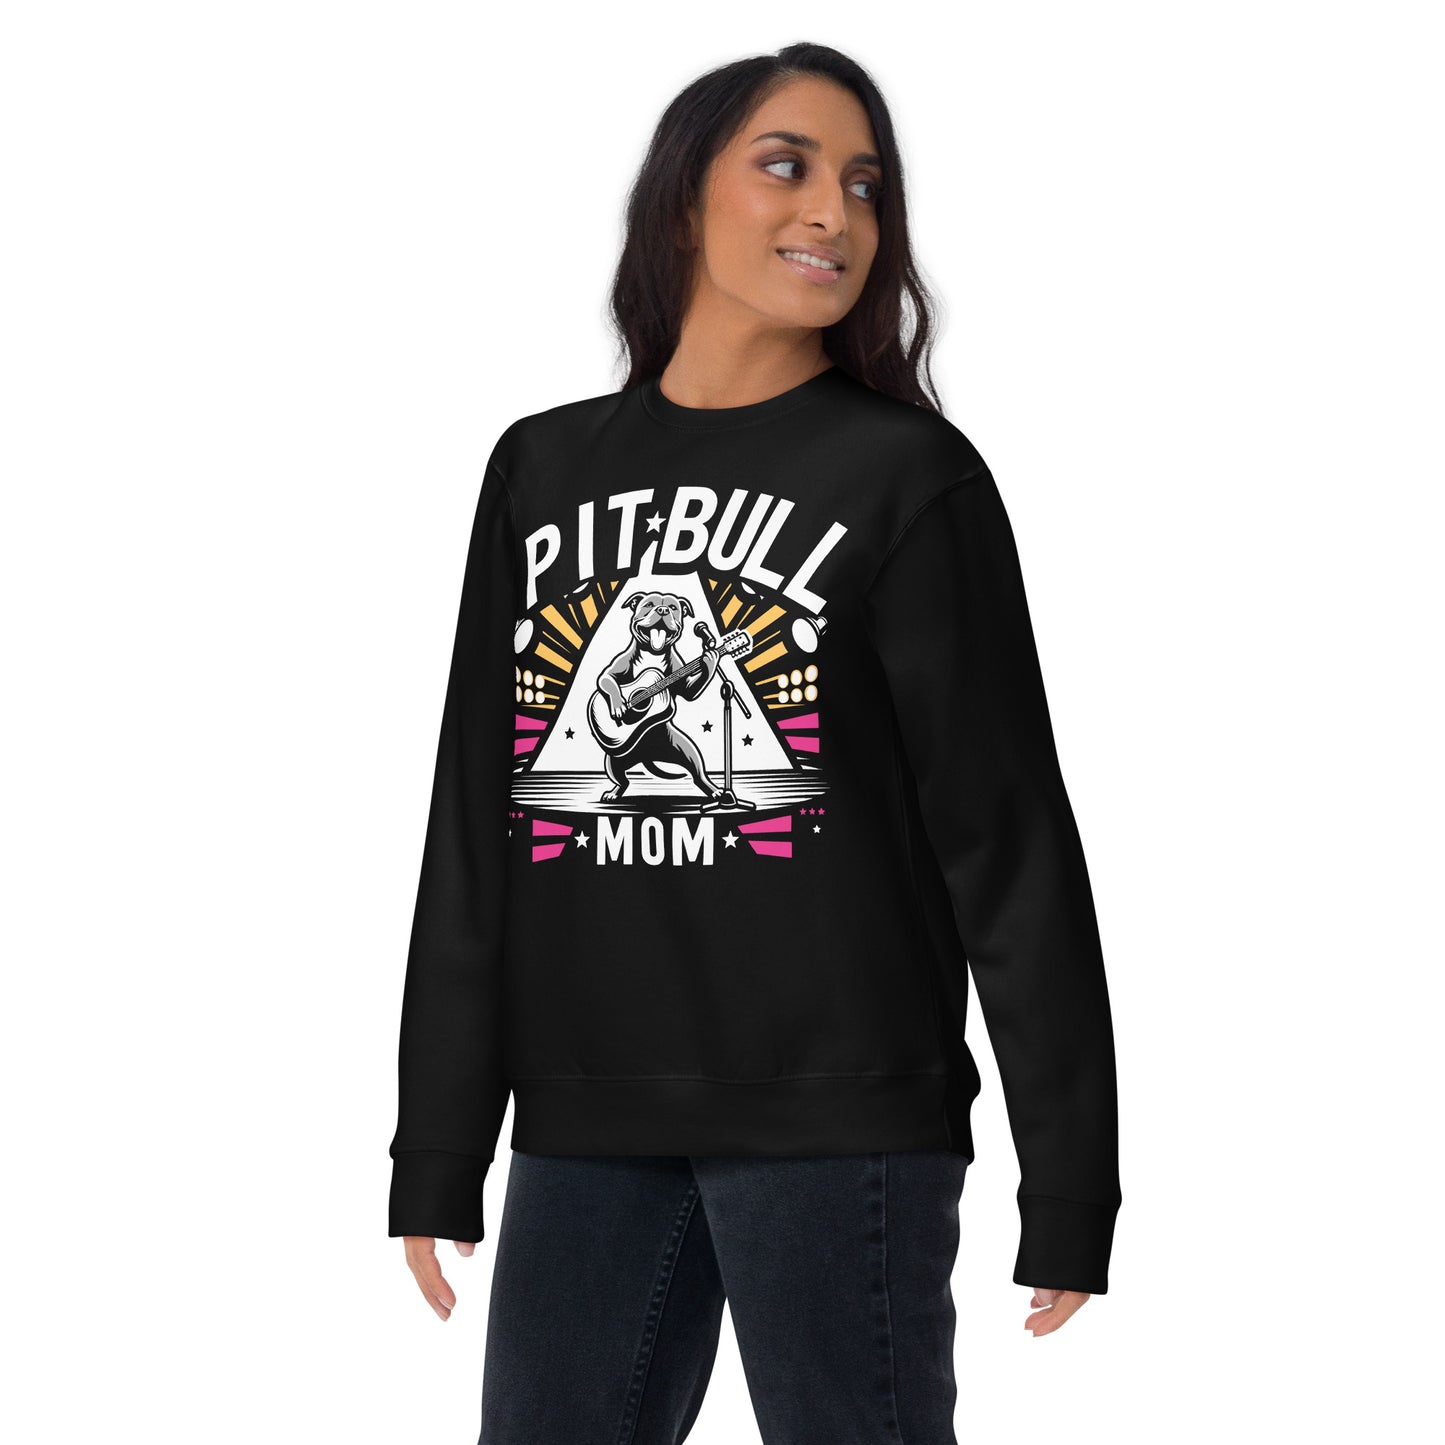 "Rockstar Paws" - Pitbull Mom Premium Sweatshirt - Pittie Choy